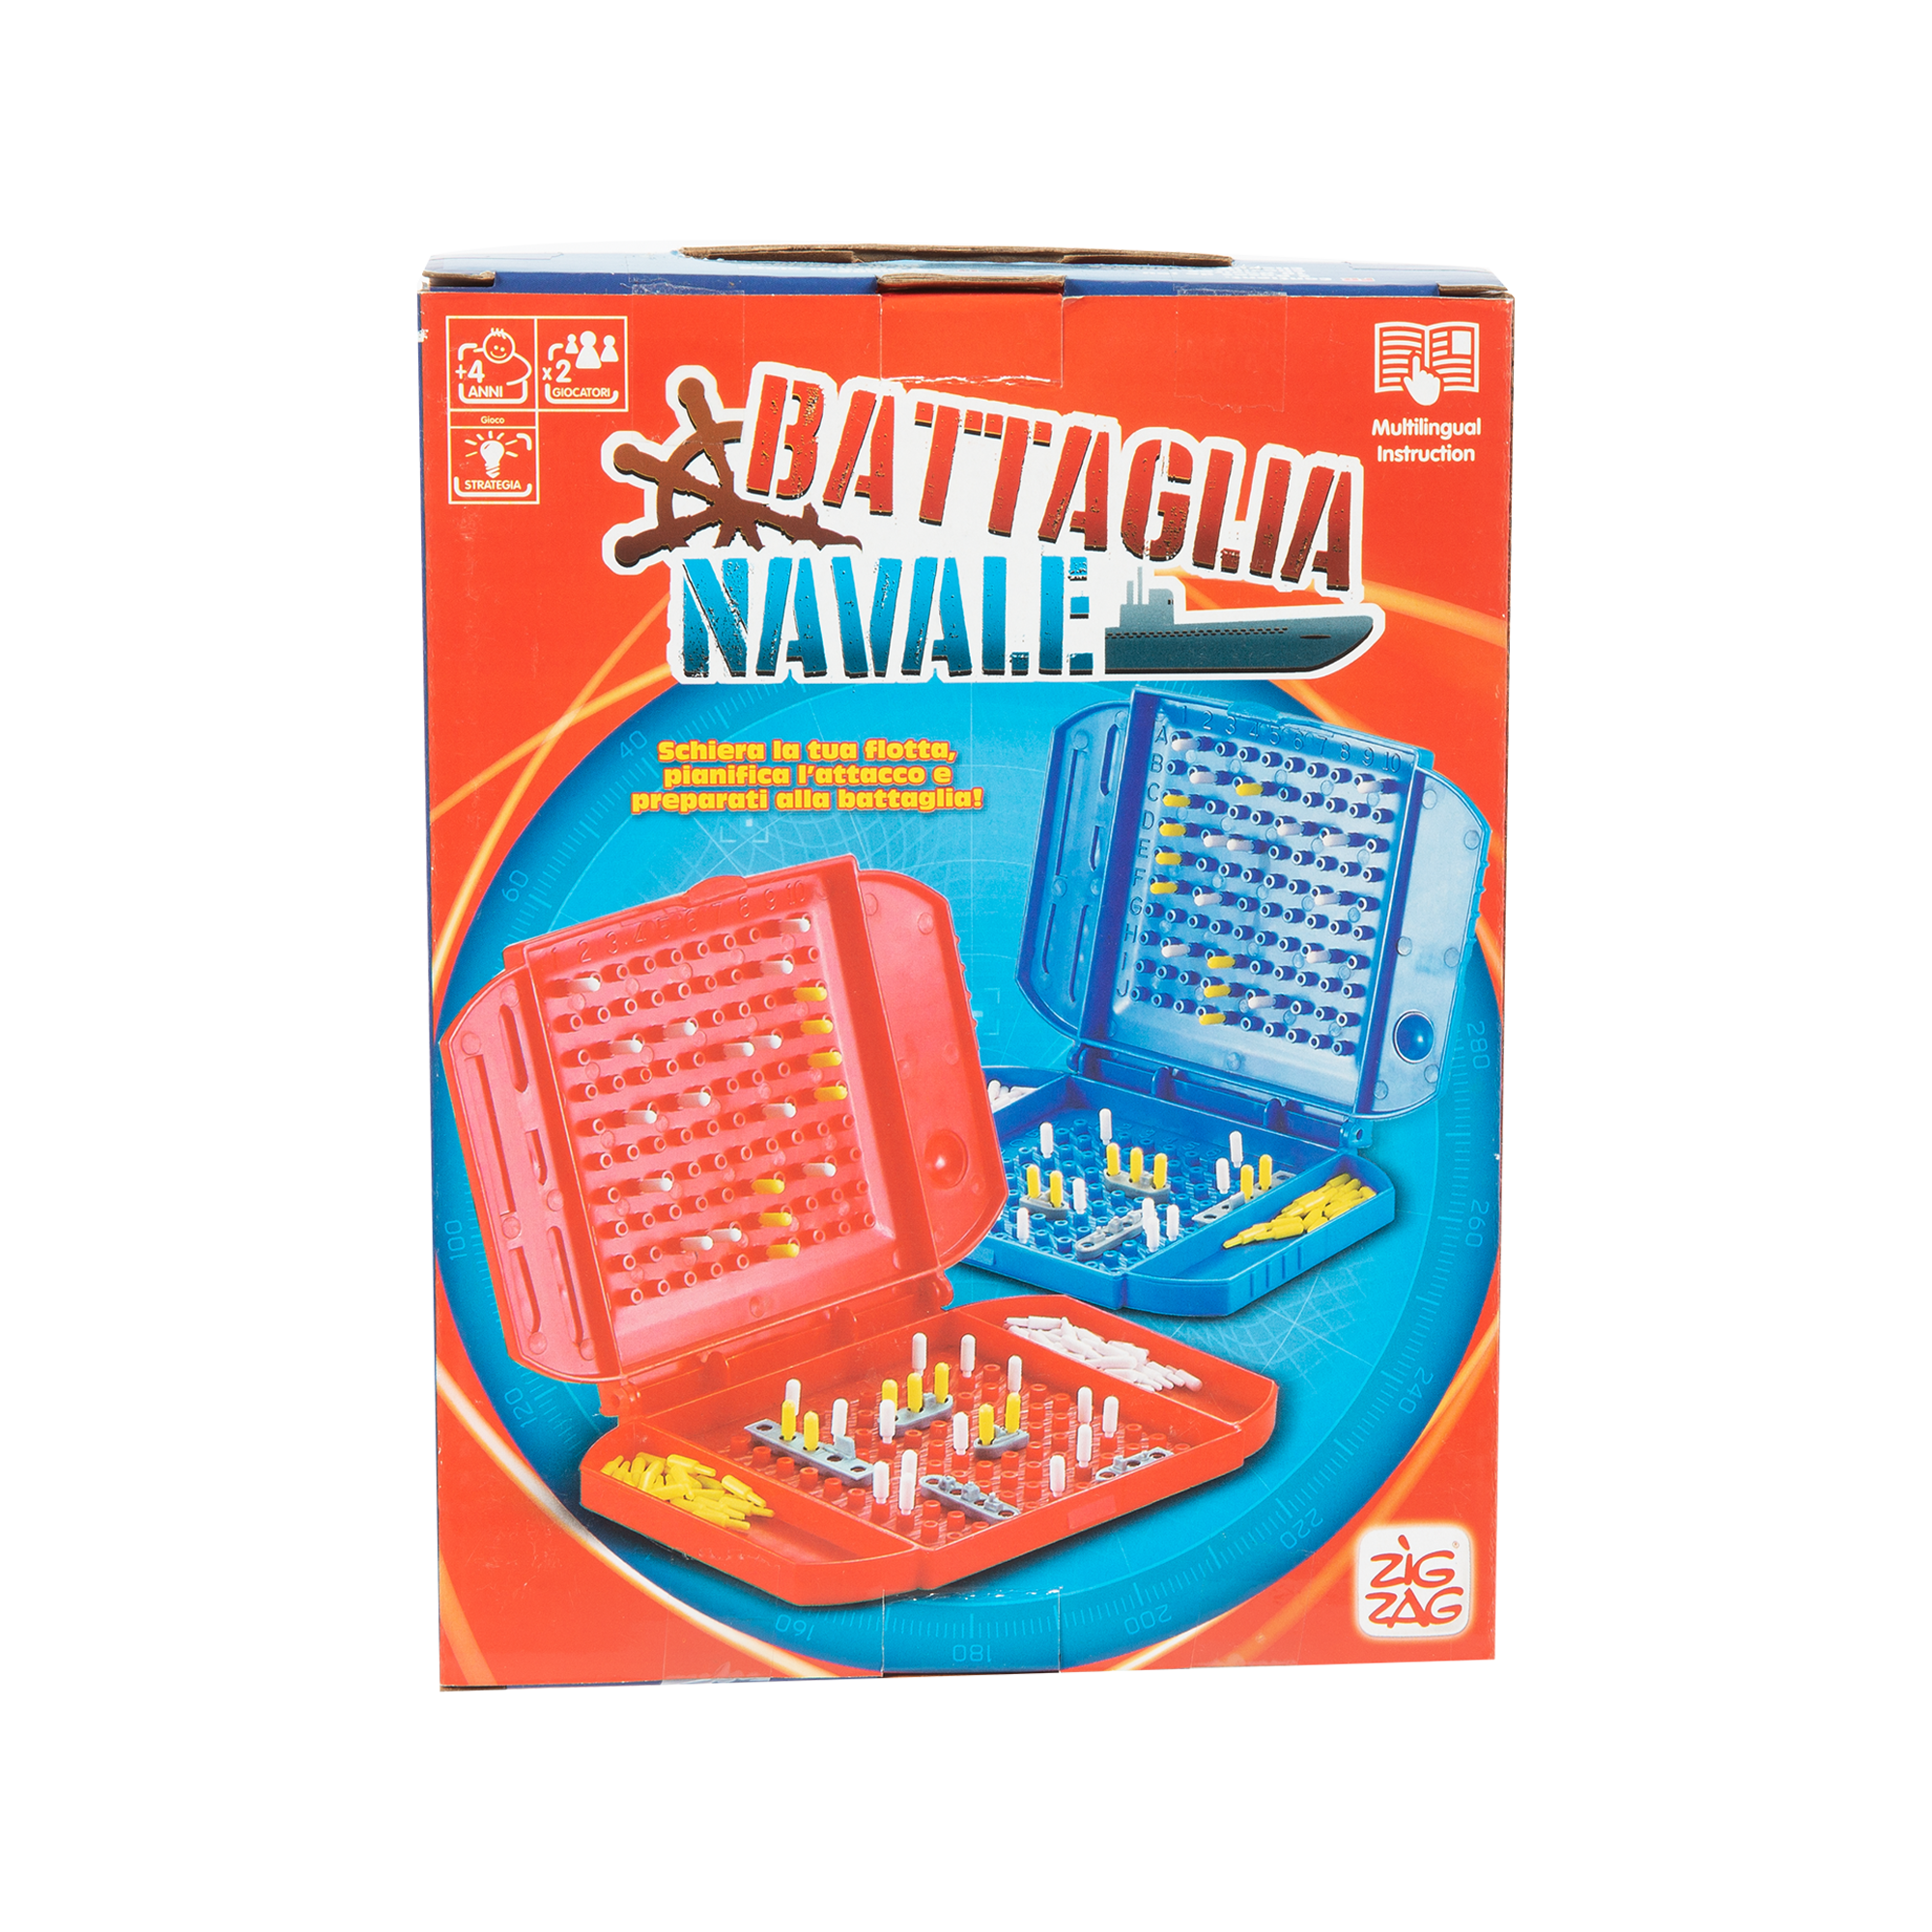 Battaglia navale - travel edition - ZIG ZAG